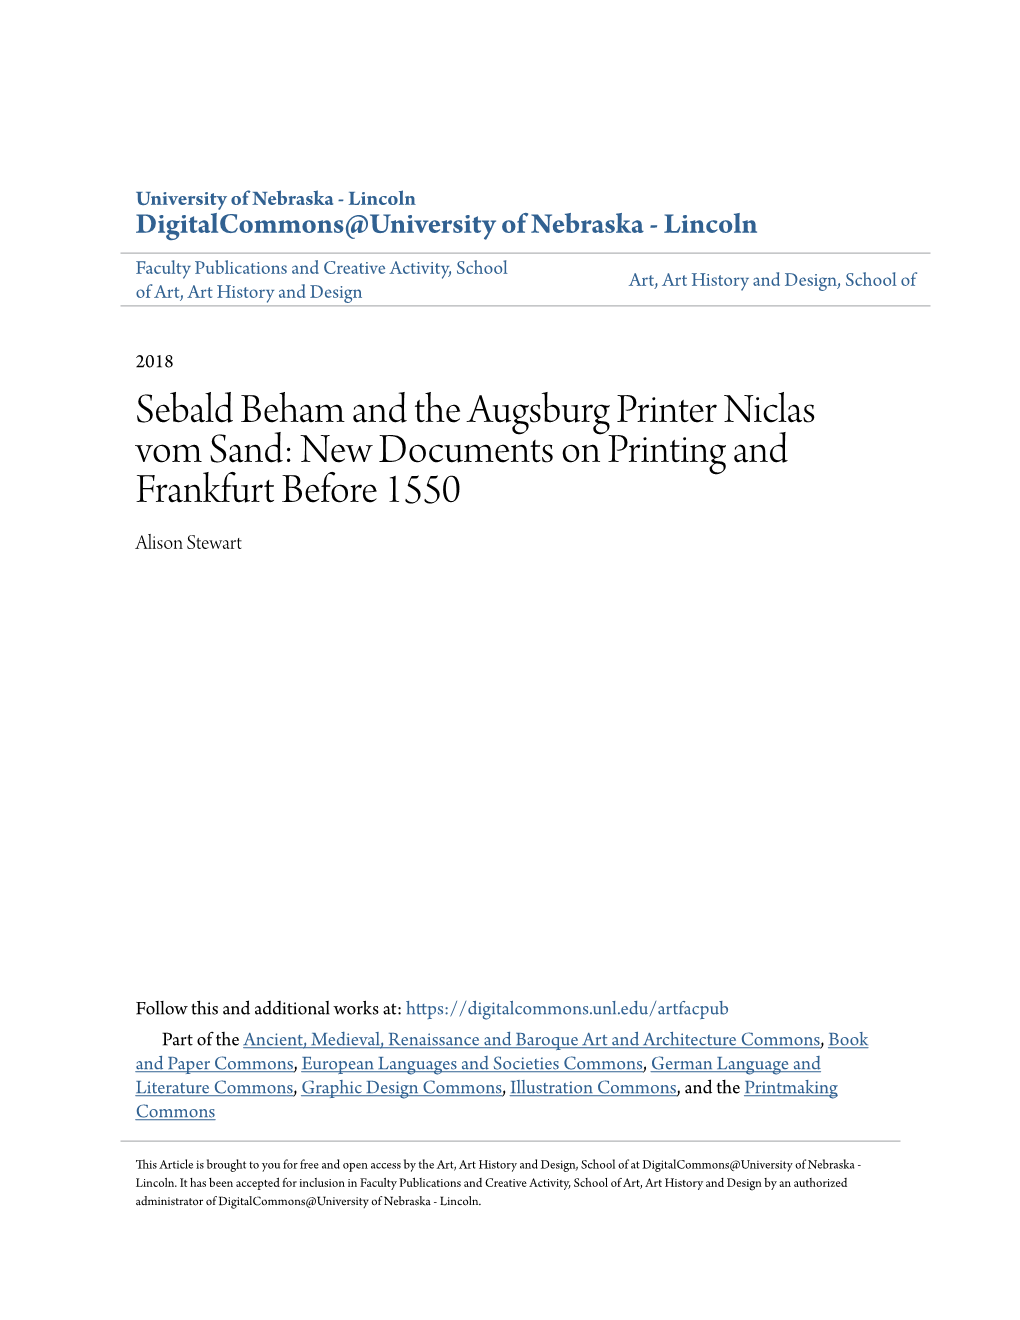 Sebald Beham and the Augsburg Printer Niclas Vom Sand: New Documents on Printing and Frankfurt Before 1550 Alison Stewart